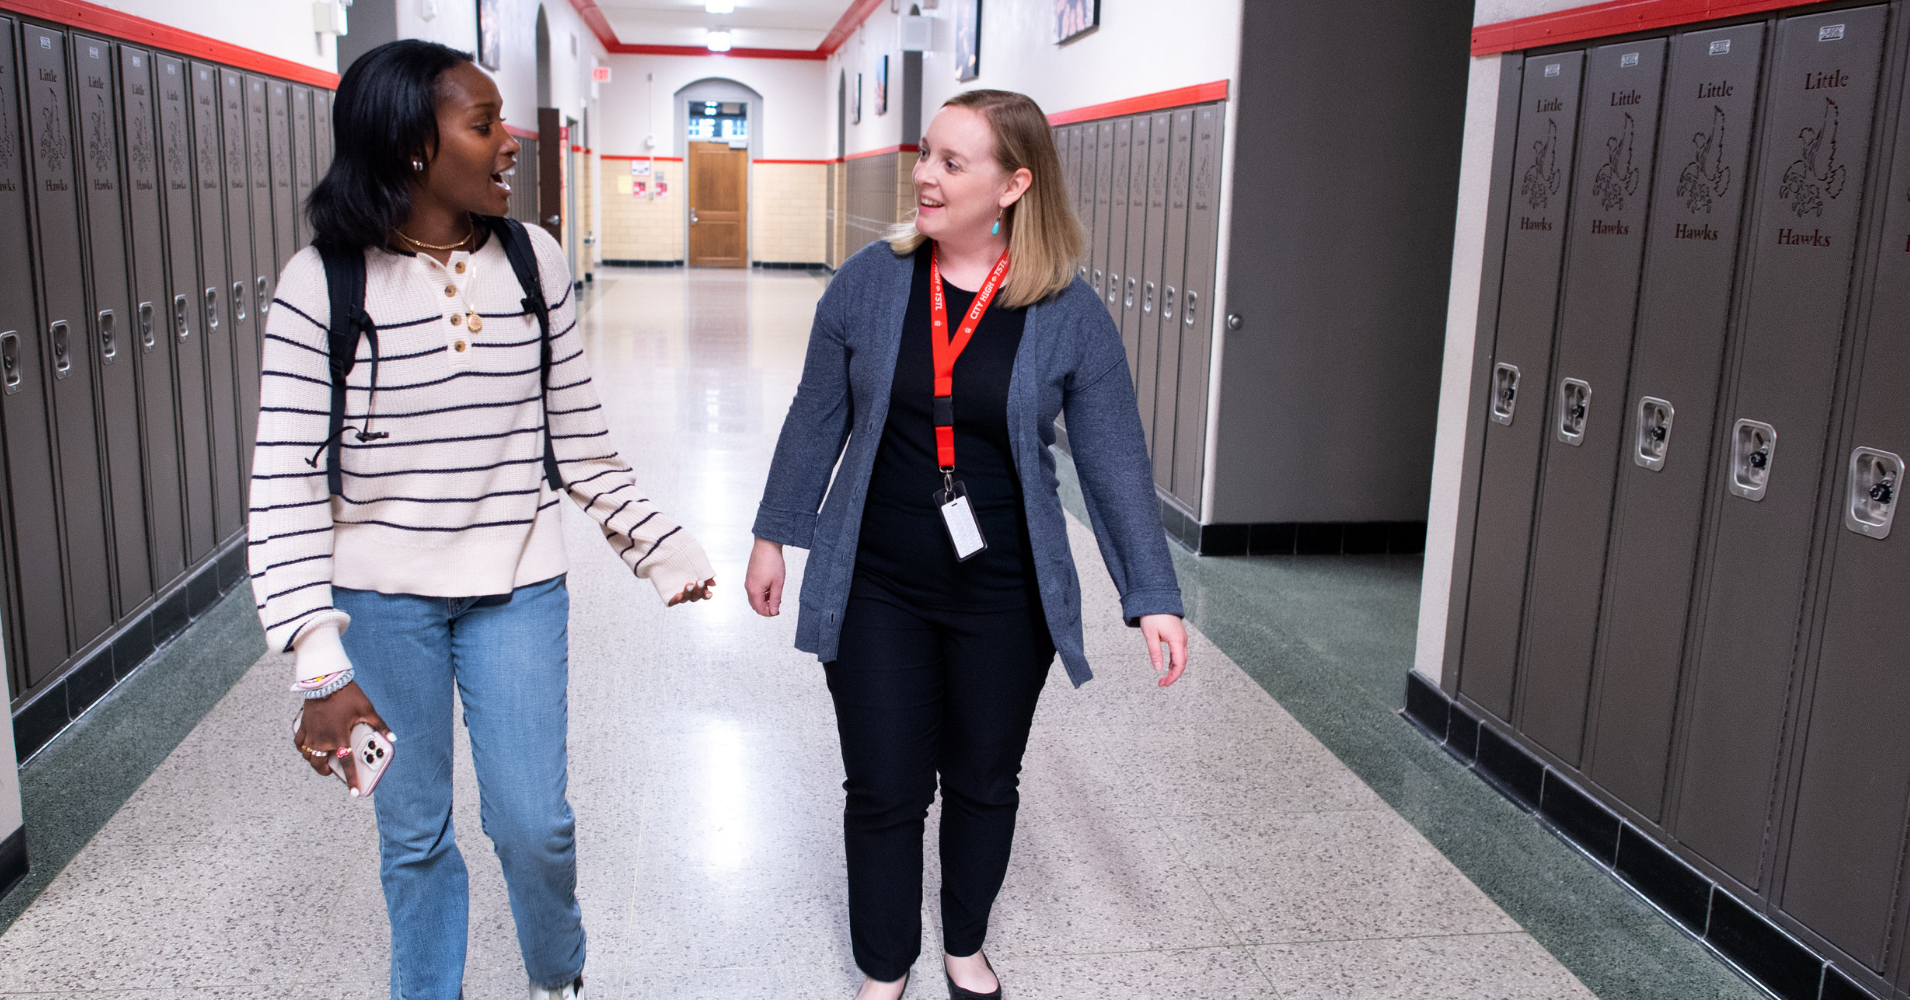 Teacher and student walking down hallway